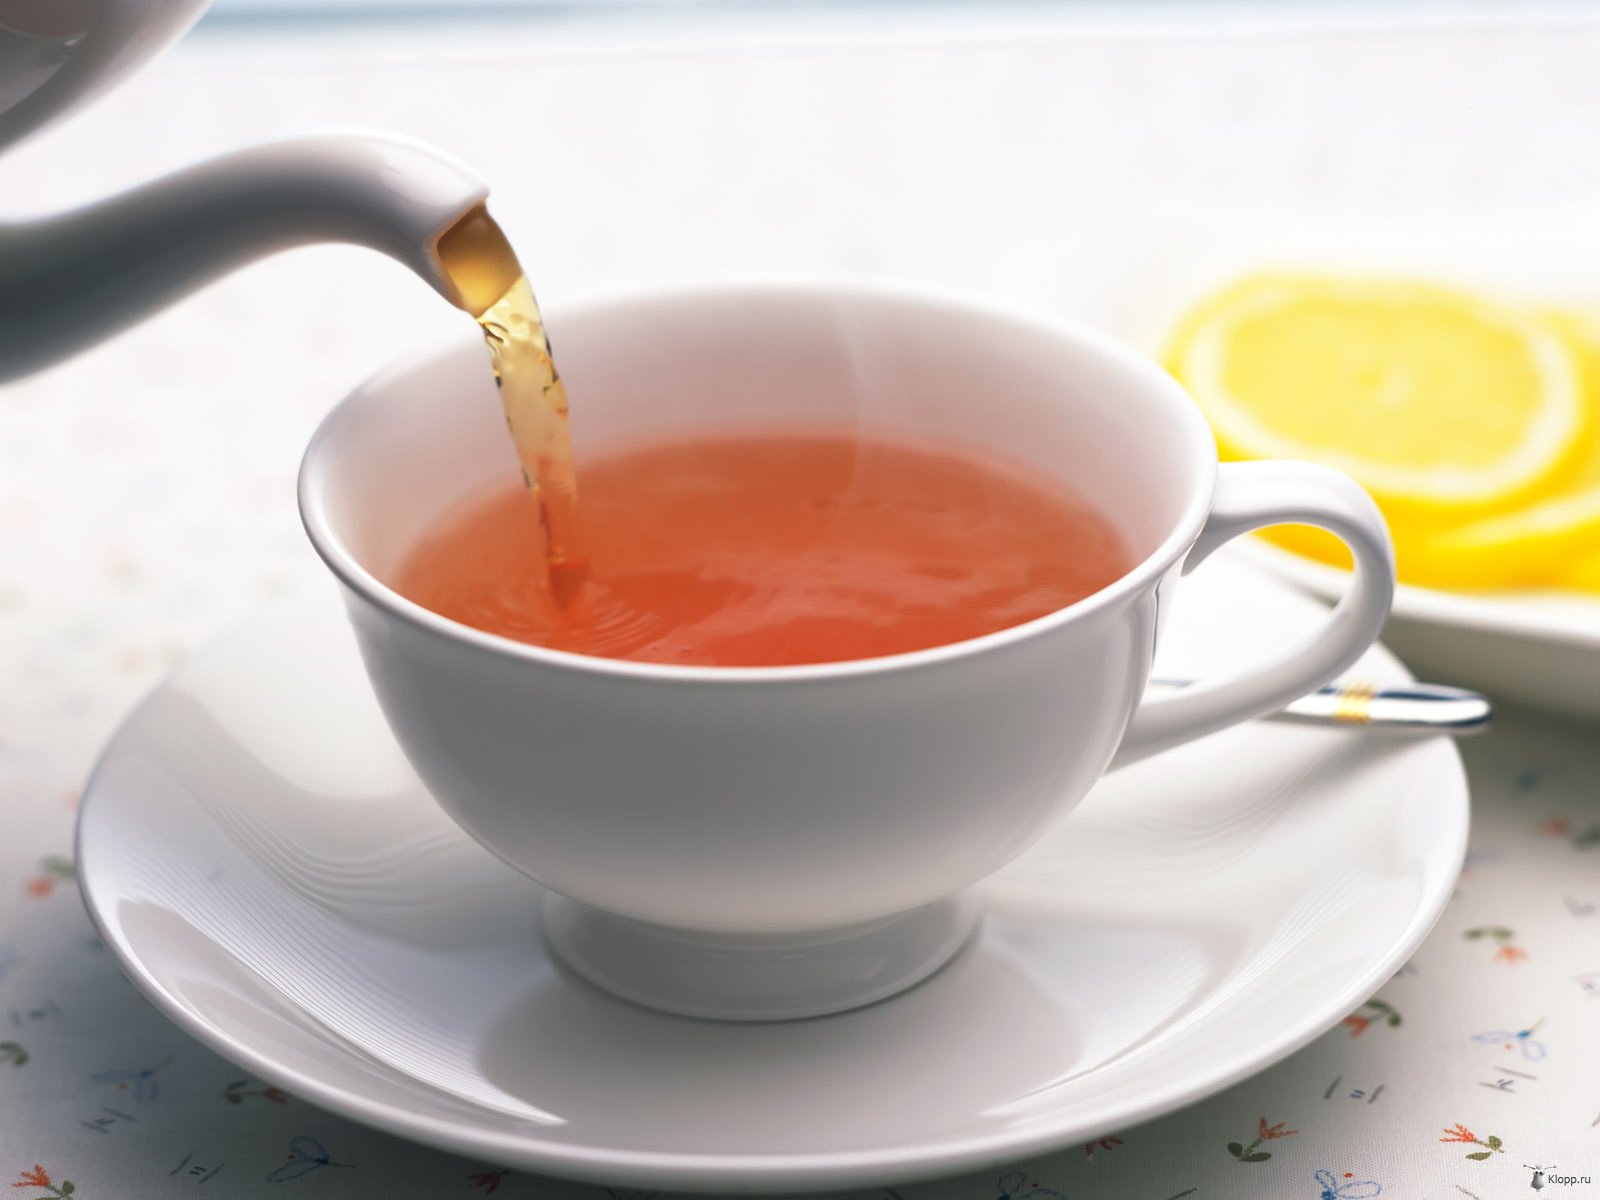 Cup Of Tea - 1600x1200 Wallpaper 